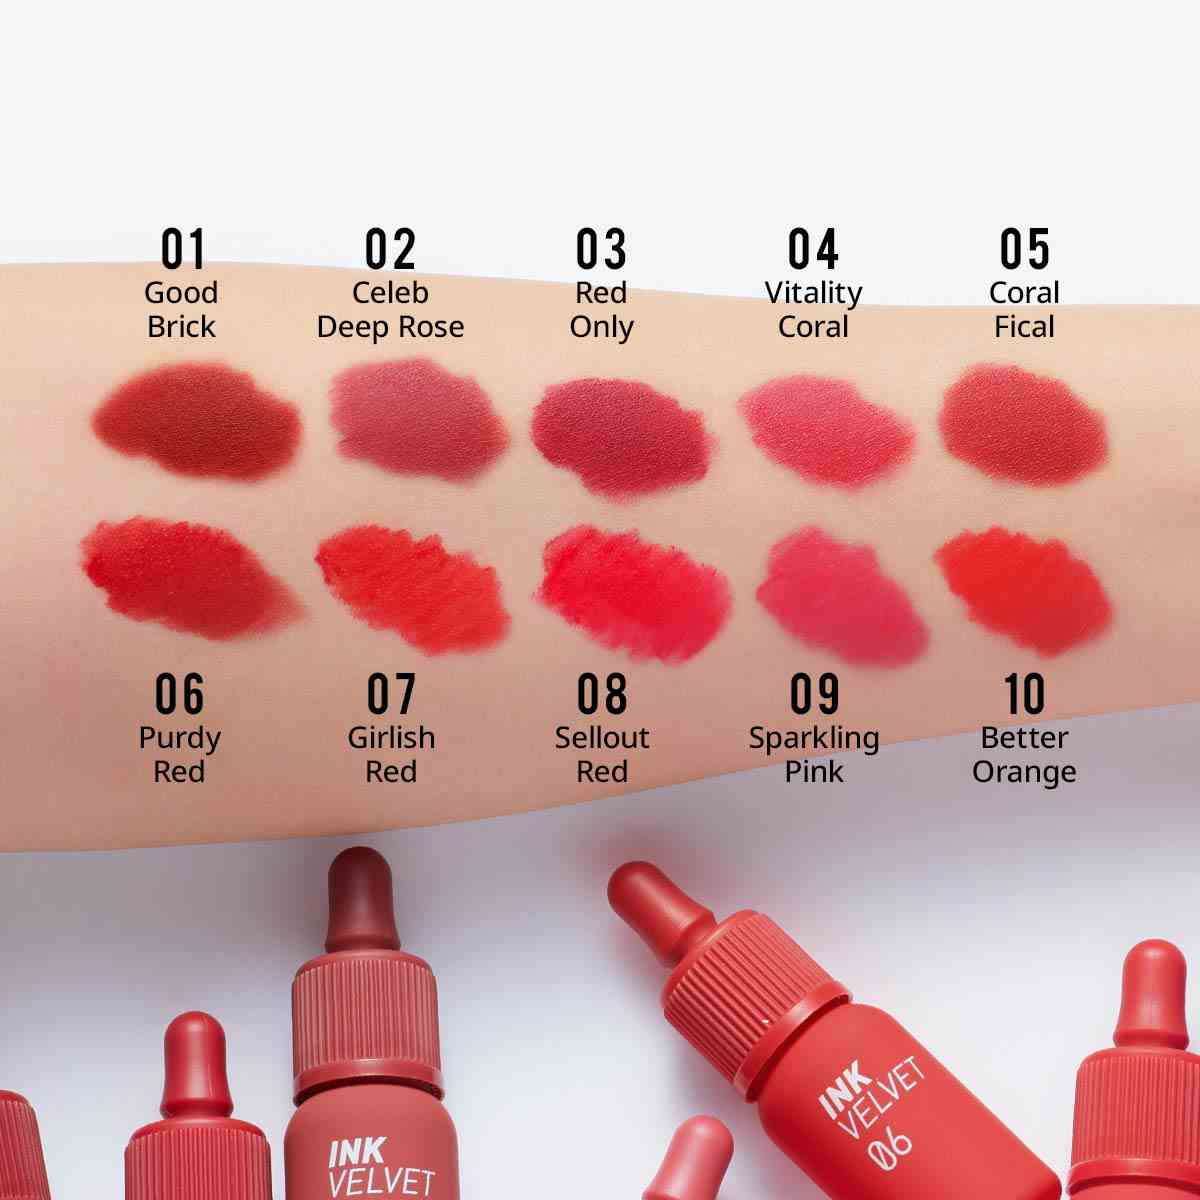 Peripera Ink Velvet Lip Tint #02 CELEB DEEP ROSE